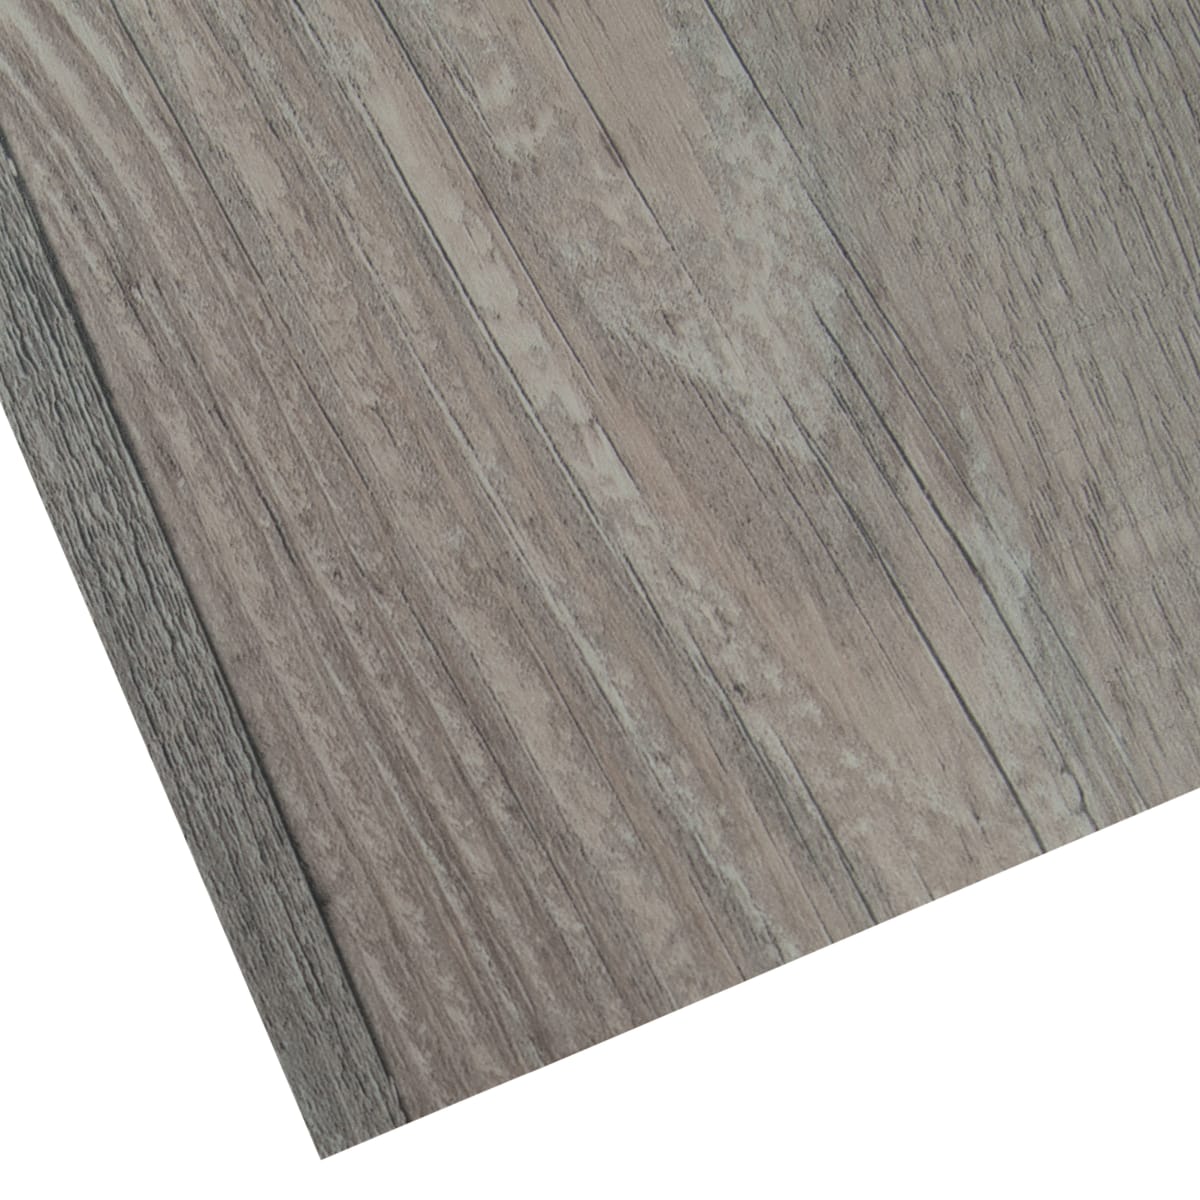 Woodlett Outer Banks Grey 6X48 Luxury Vinyl Plank Flooring